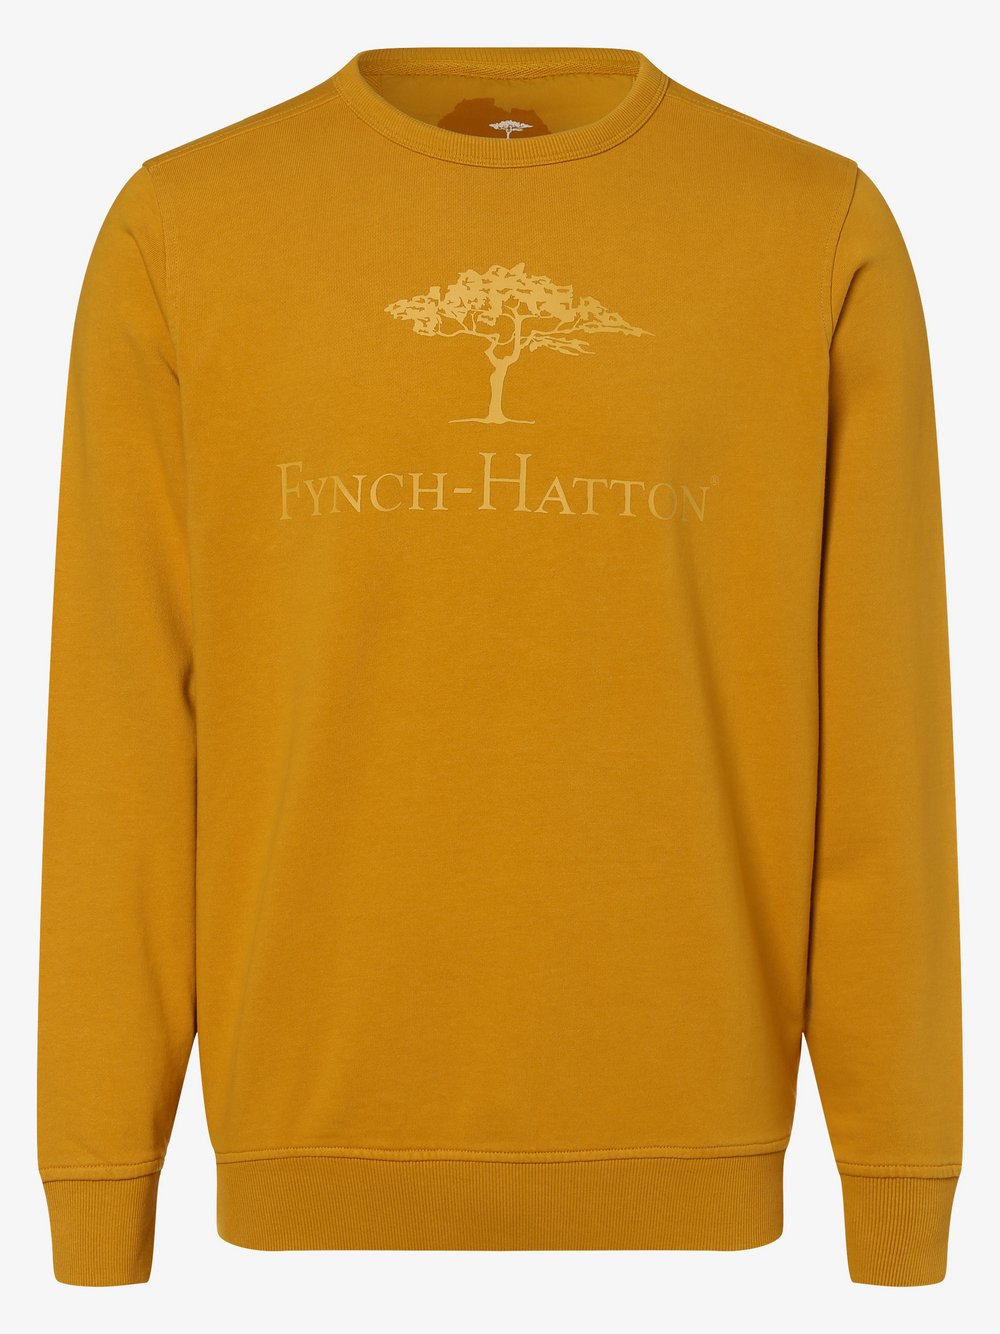 Fynch-Hatton - Męska bluza nierozpinana, żółty